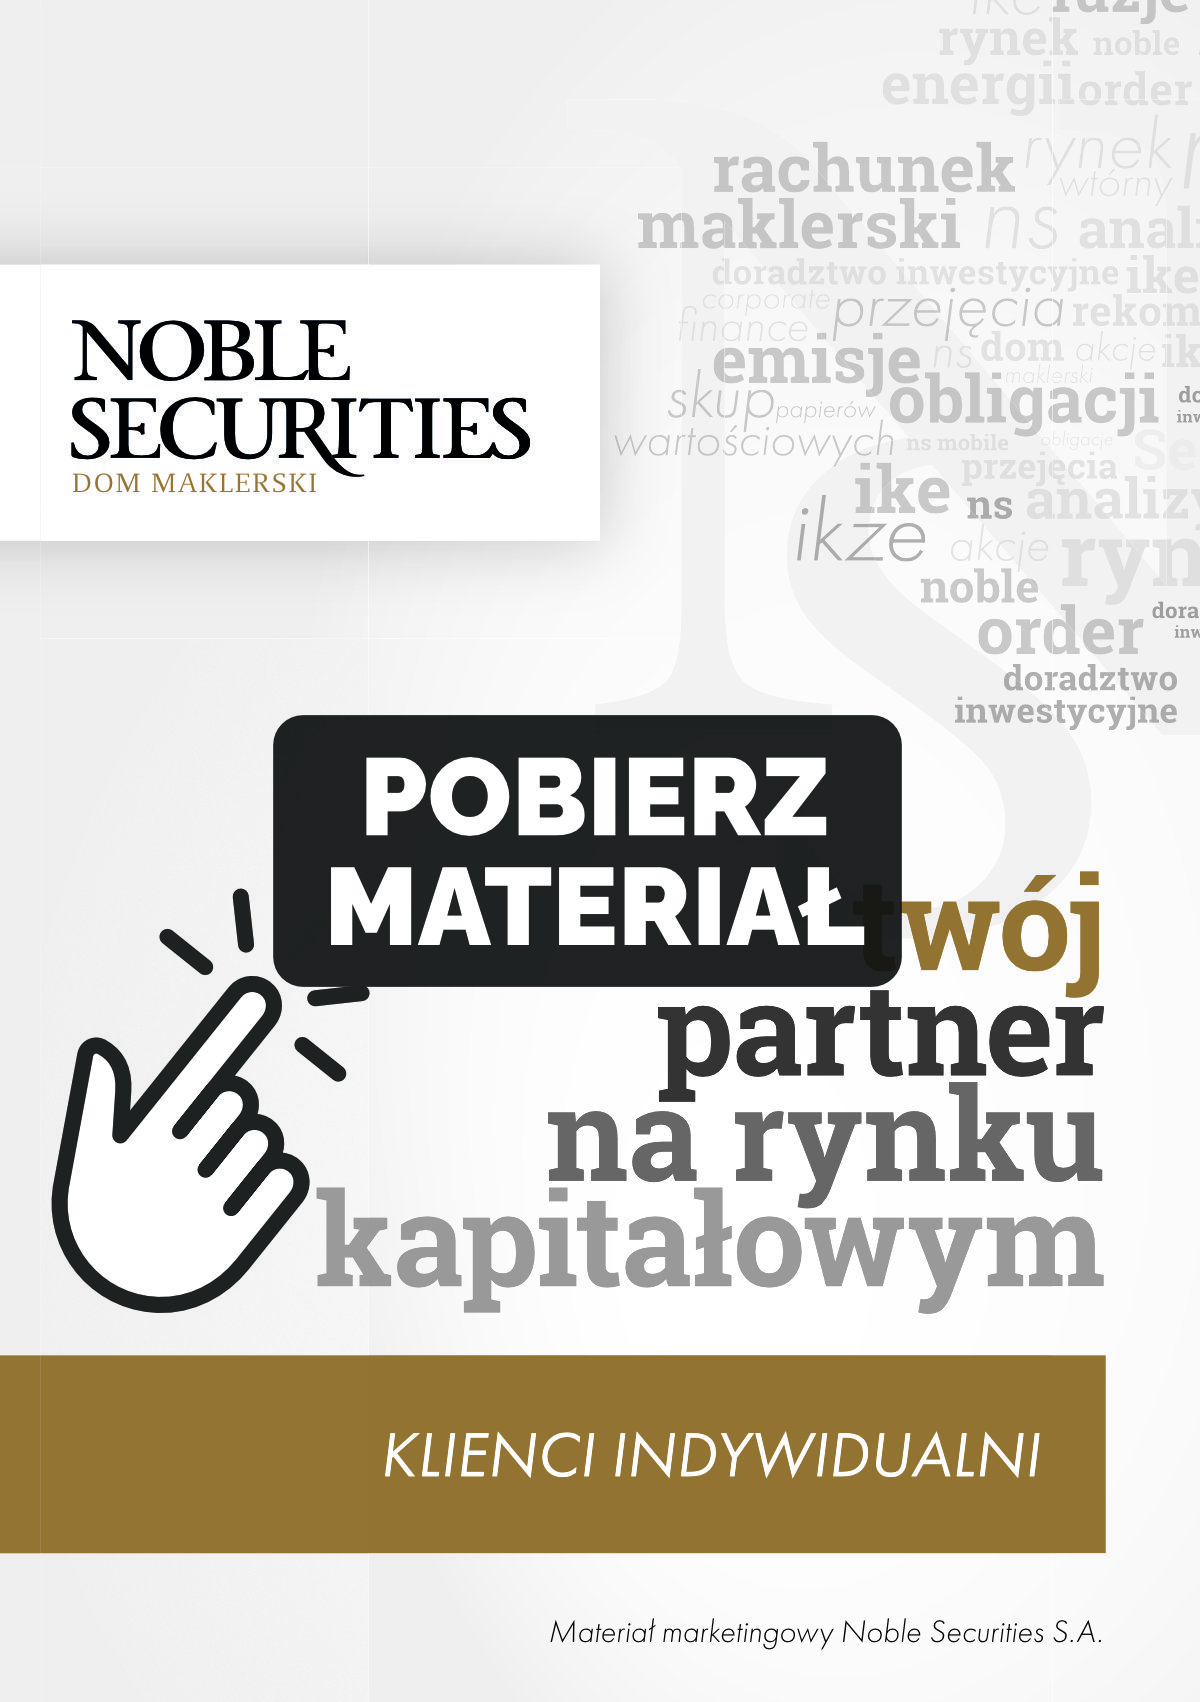 Noble Securities | Ulotka